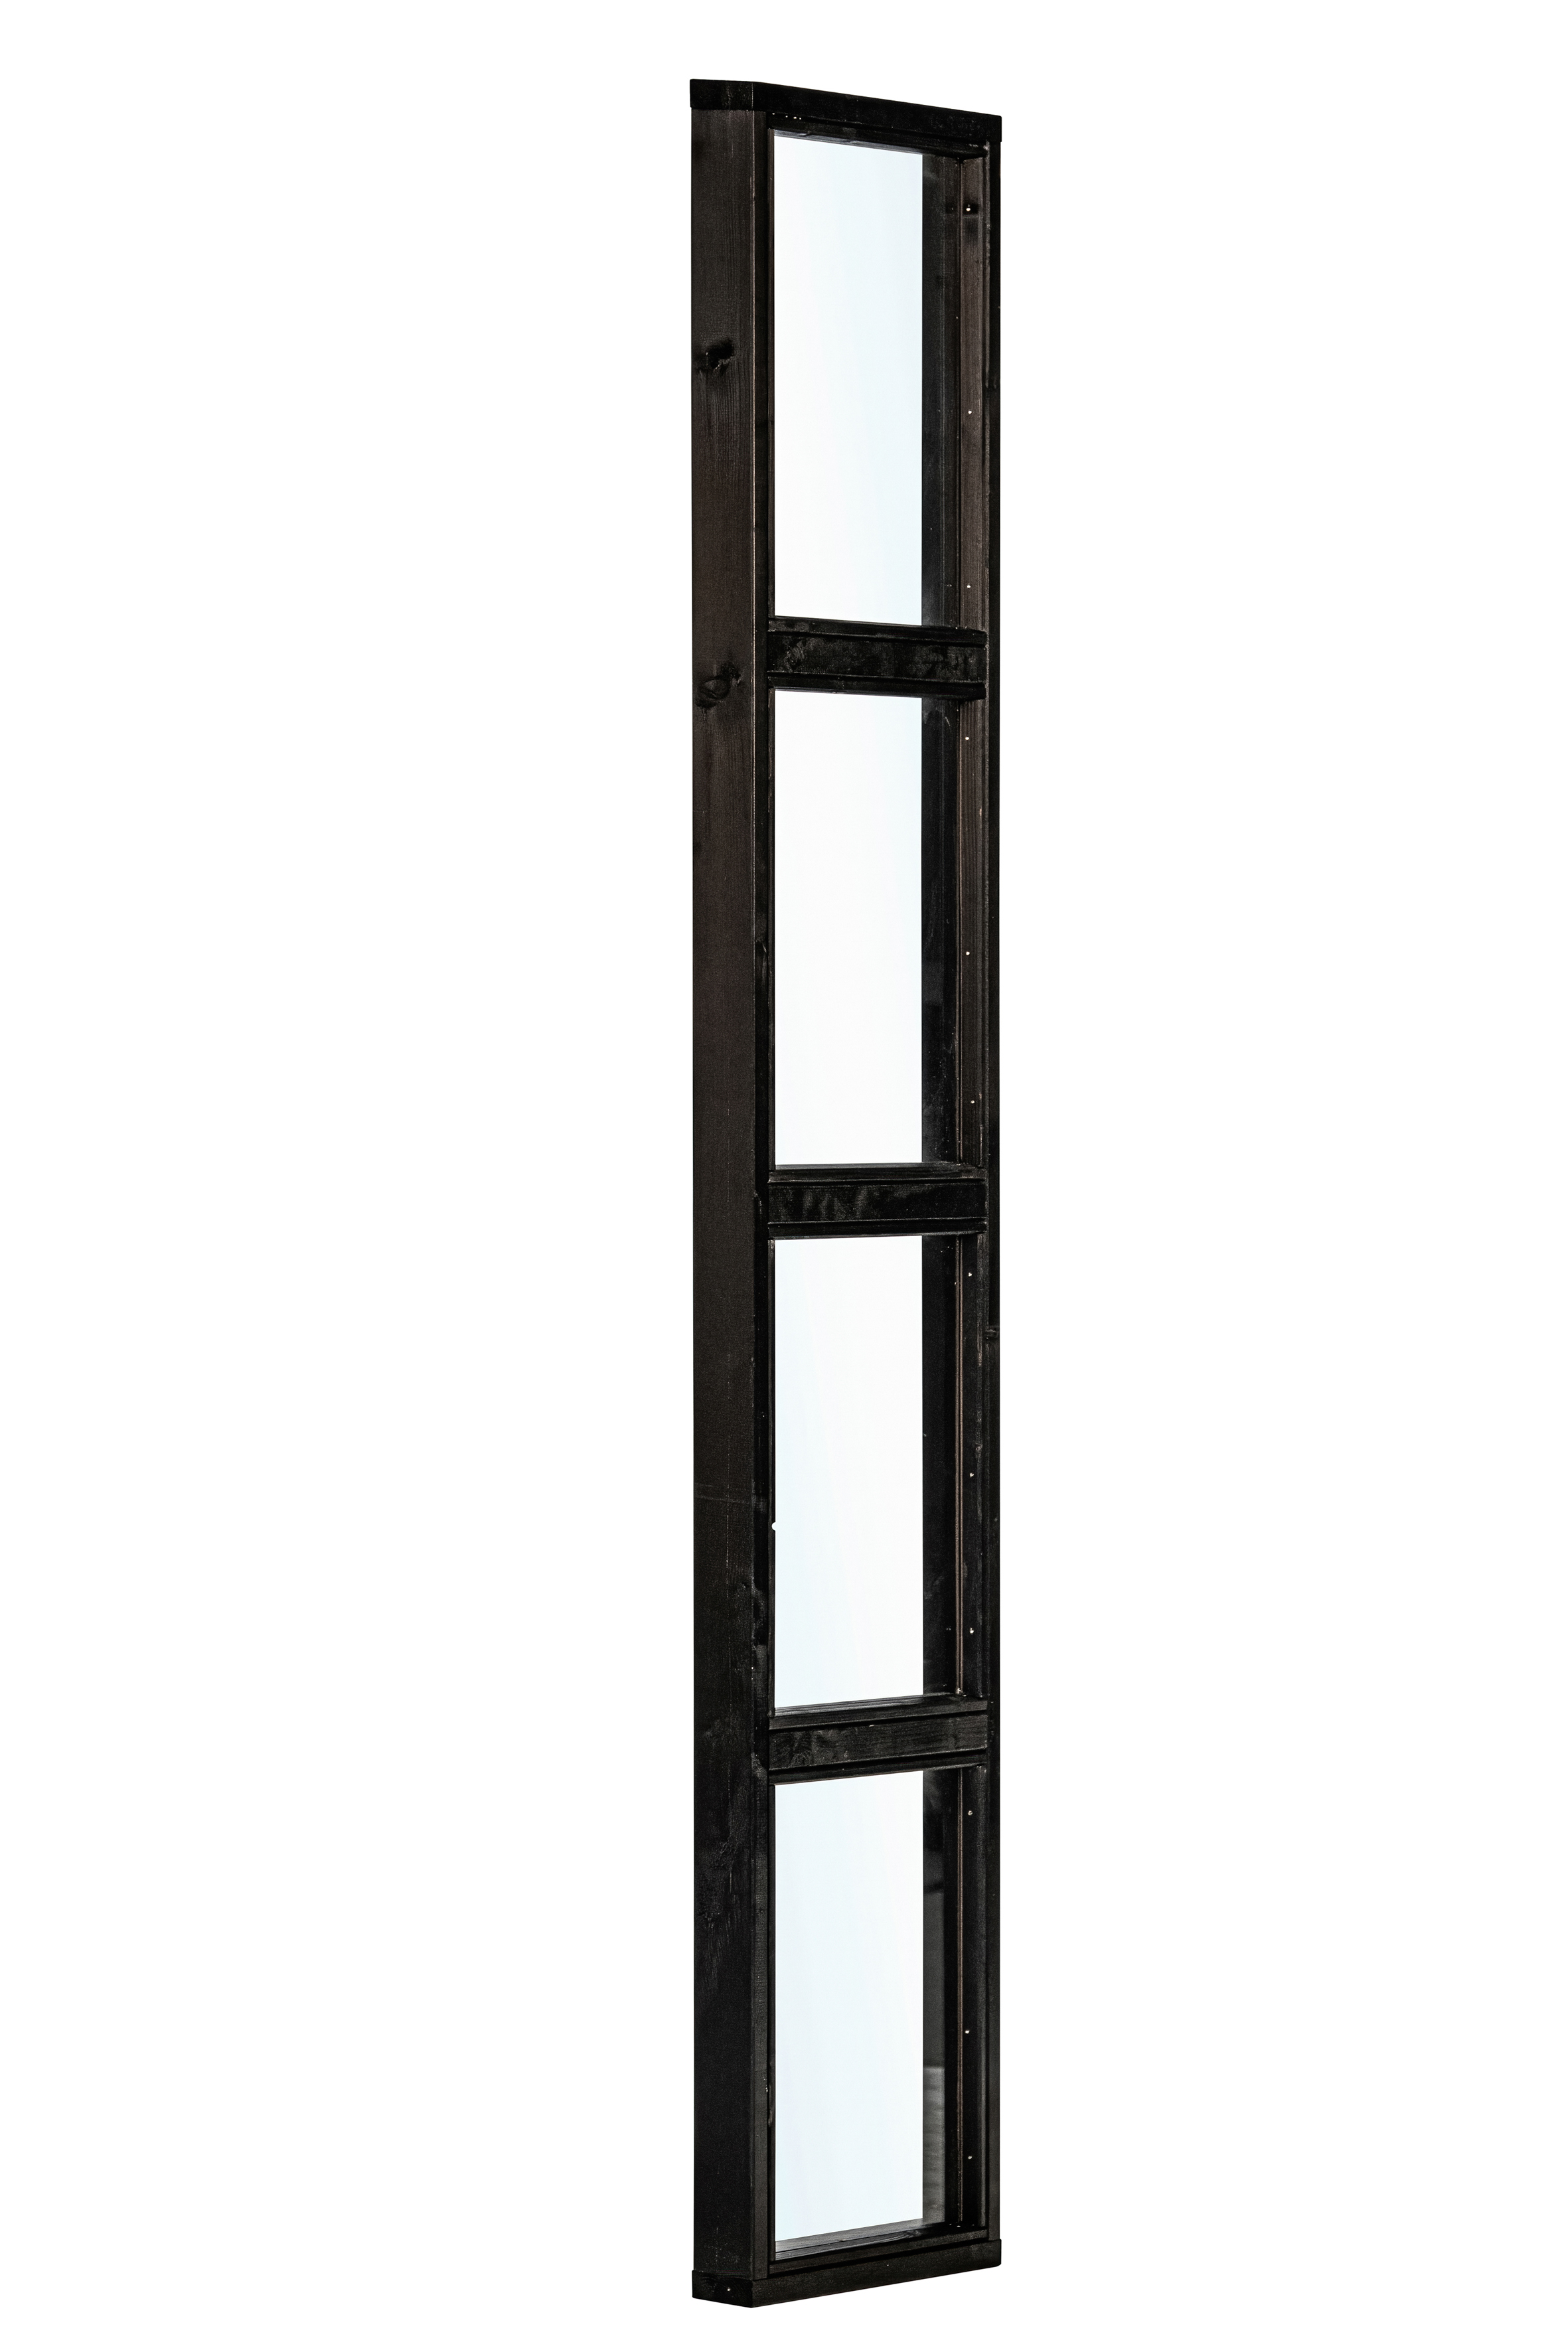 Wandmodul modern schwarz 45x224cm